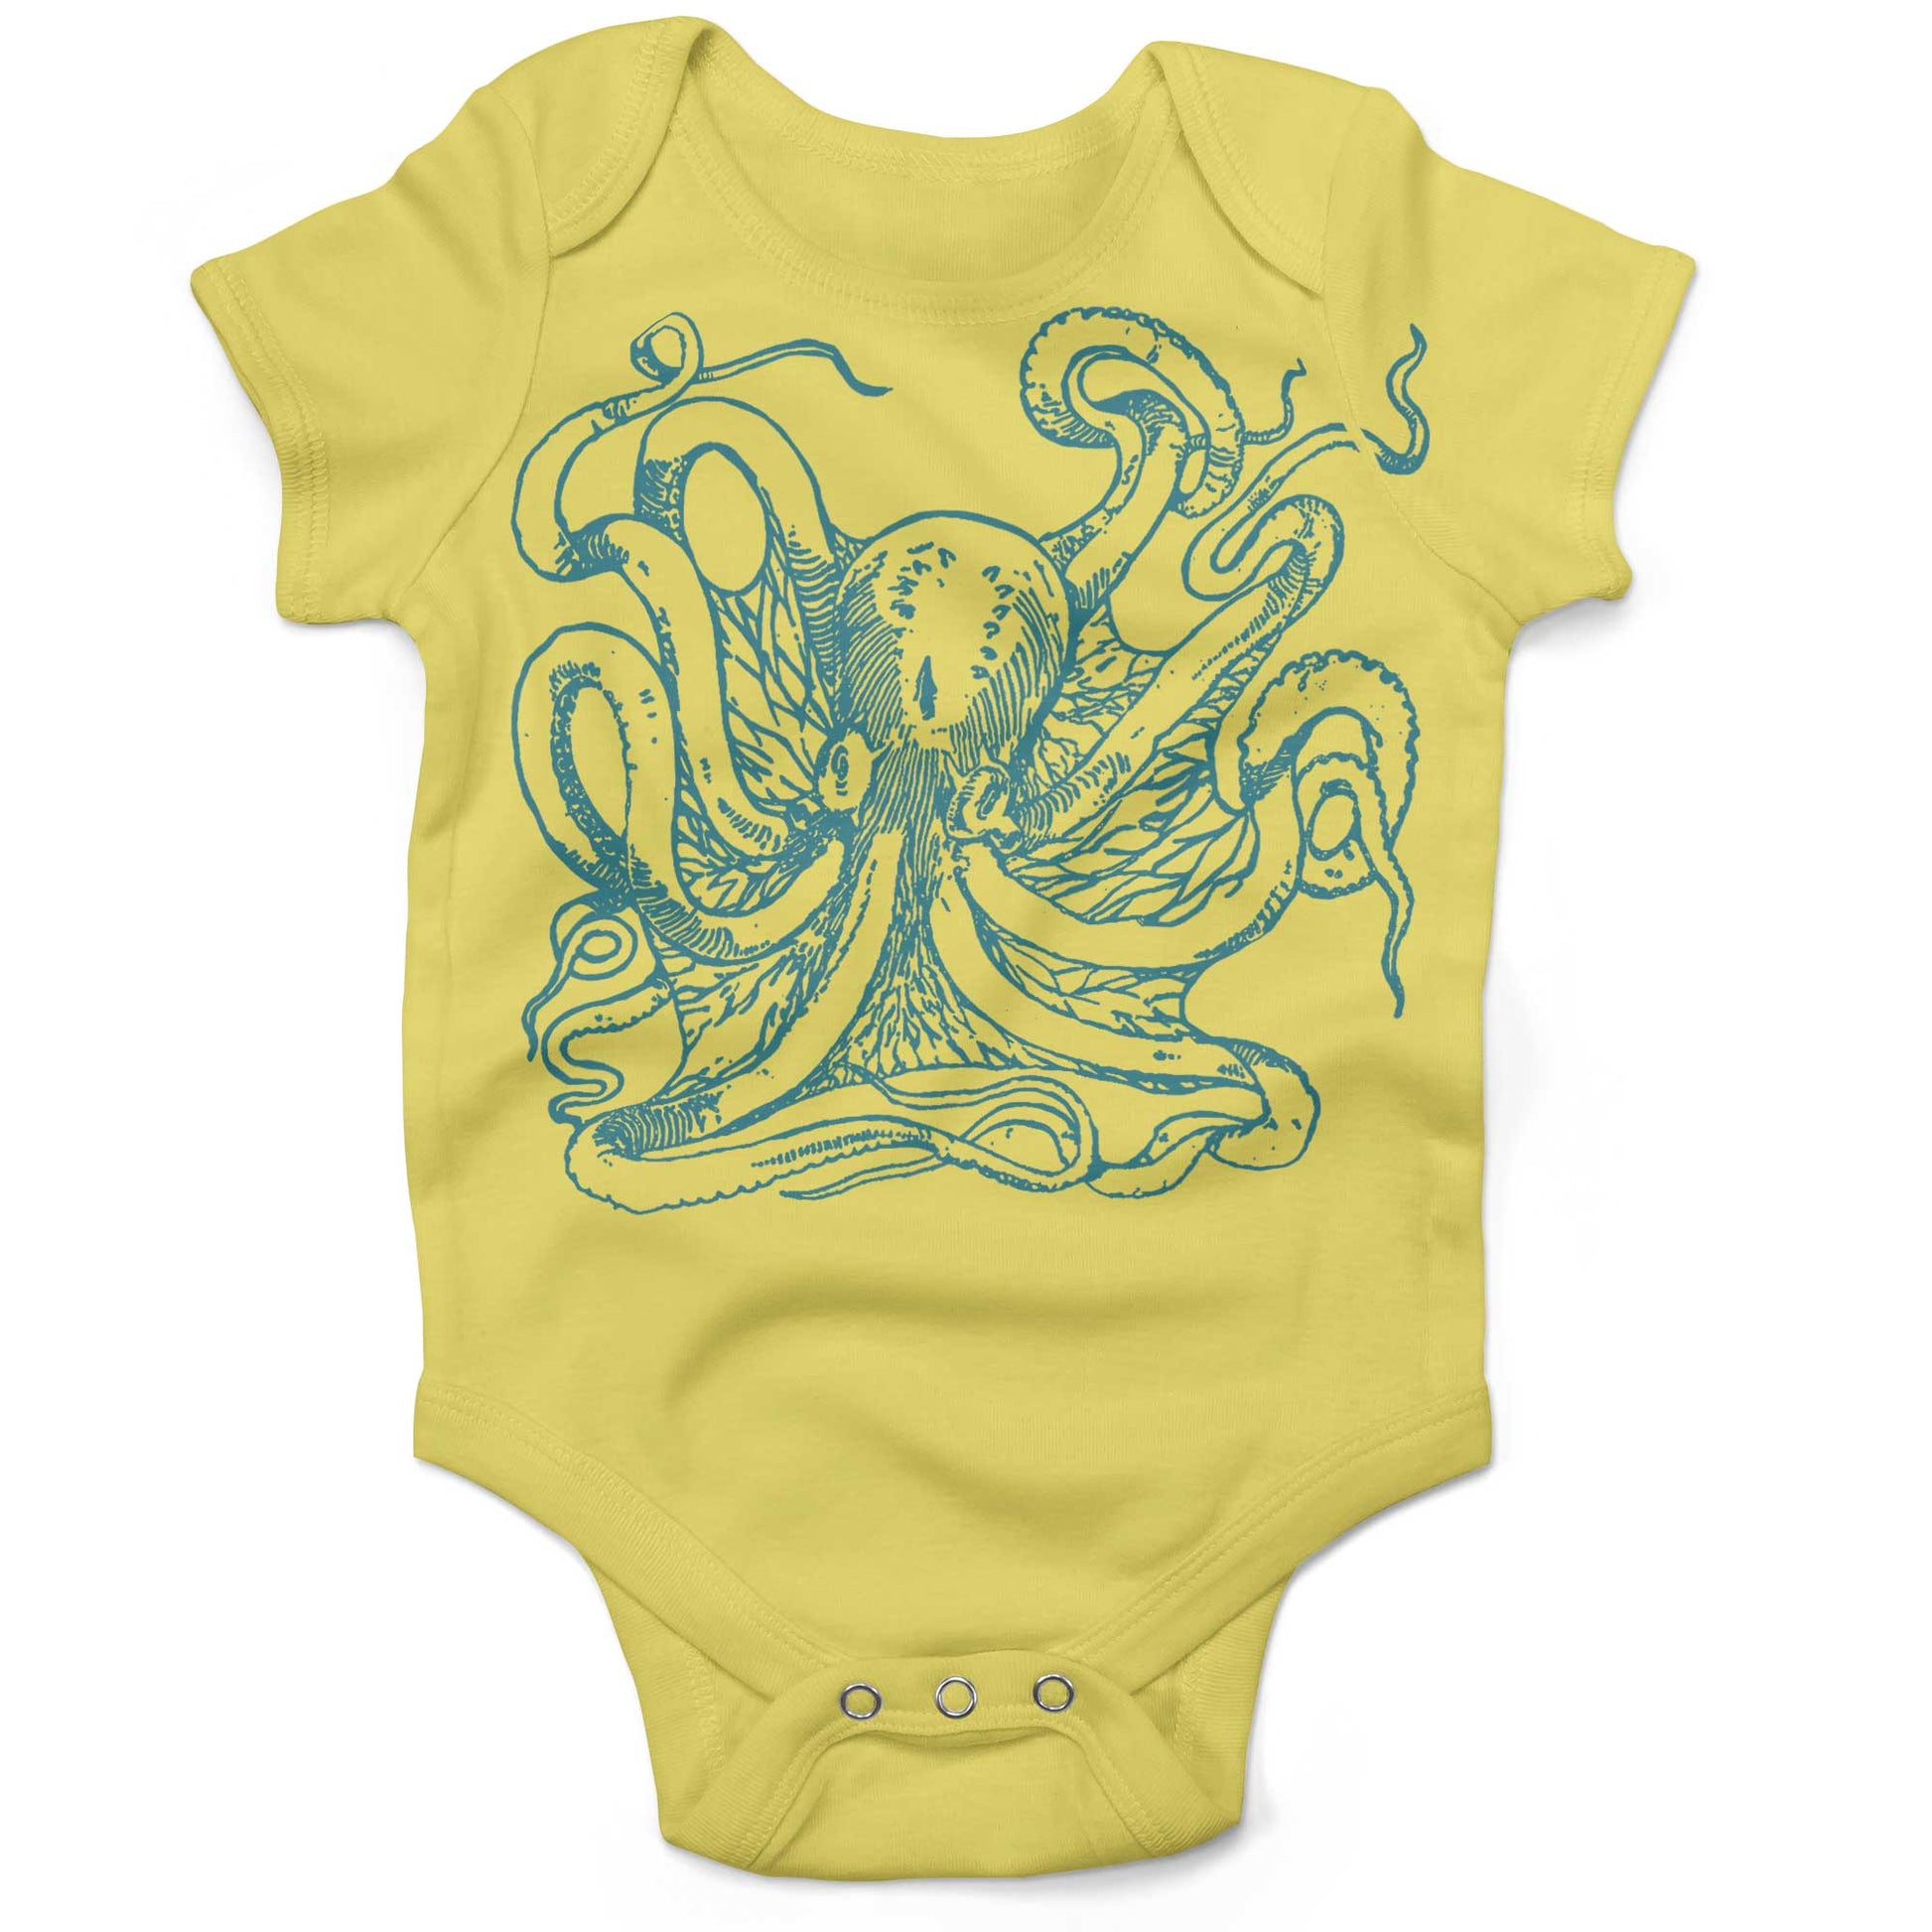 Giant Octopus Infant Bodysuit or Raglan Tee-Yellow-3-6 months